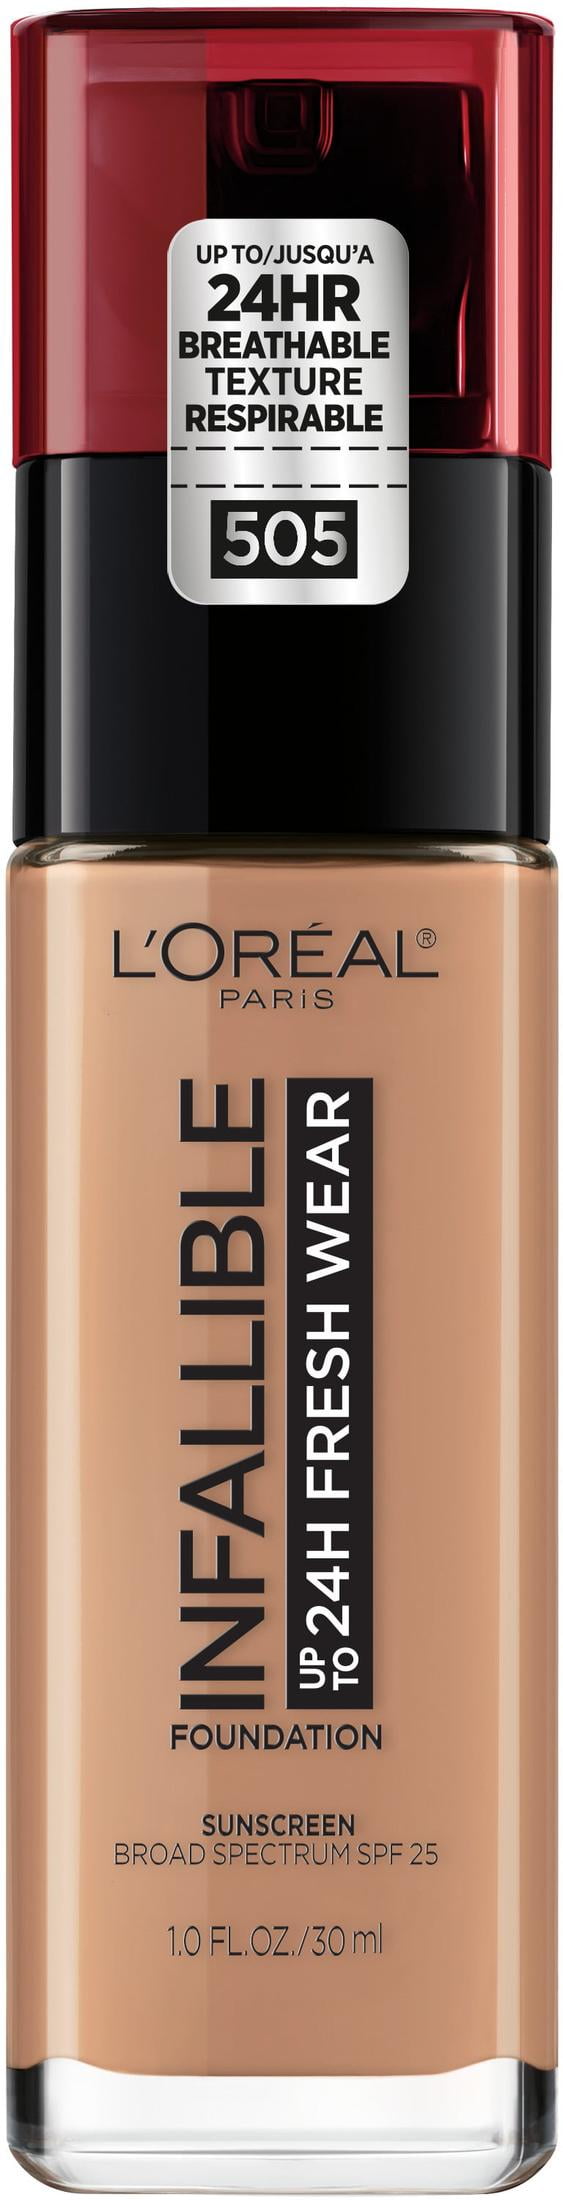 L'Oreal Paris Infallible Fresh Wear 24 Hr Liquid Foundation Makeup, 505  Toffee, 1 fl oz 